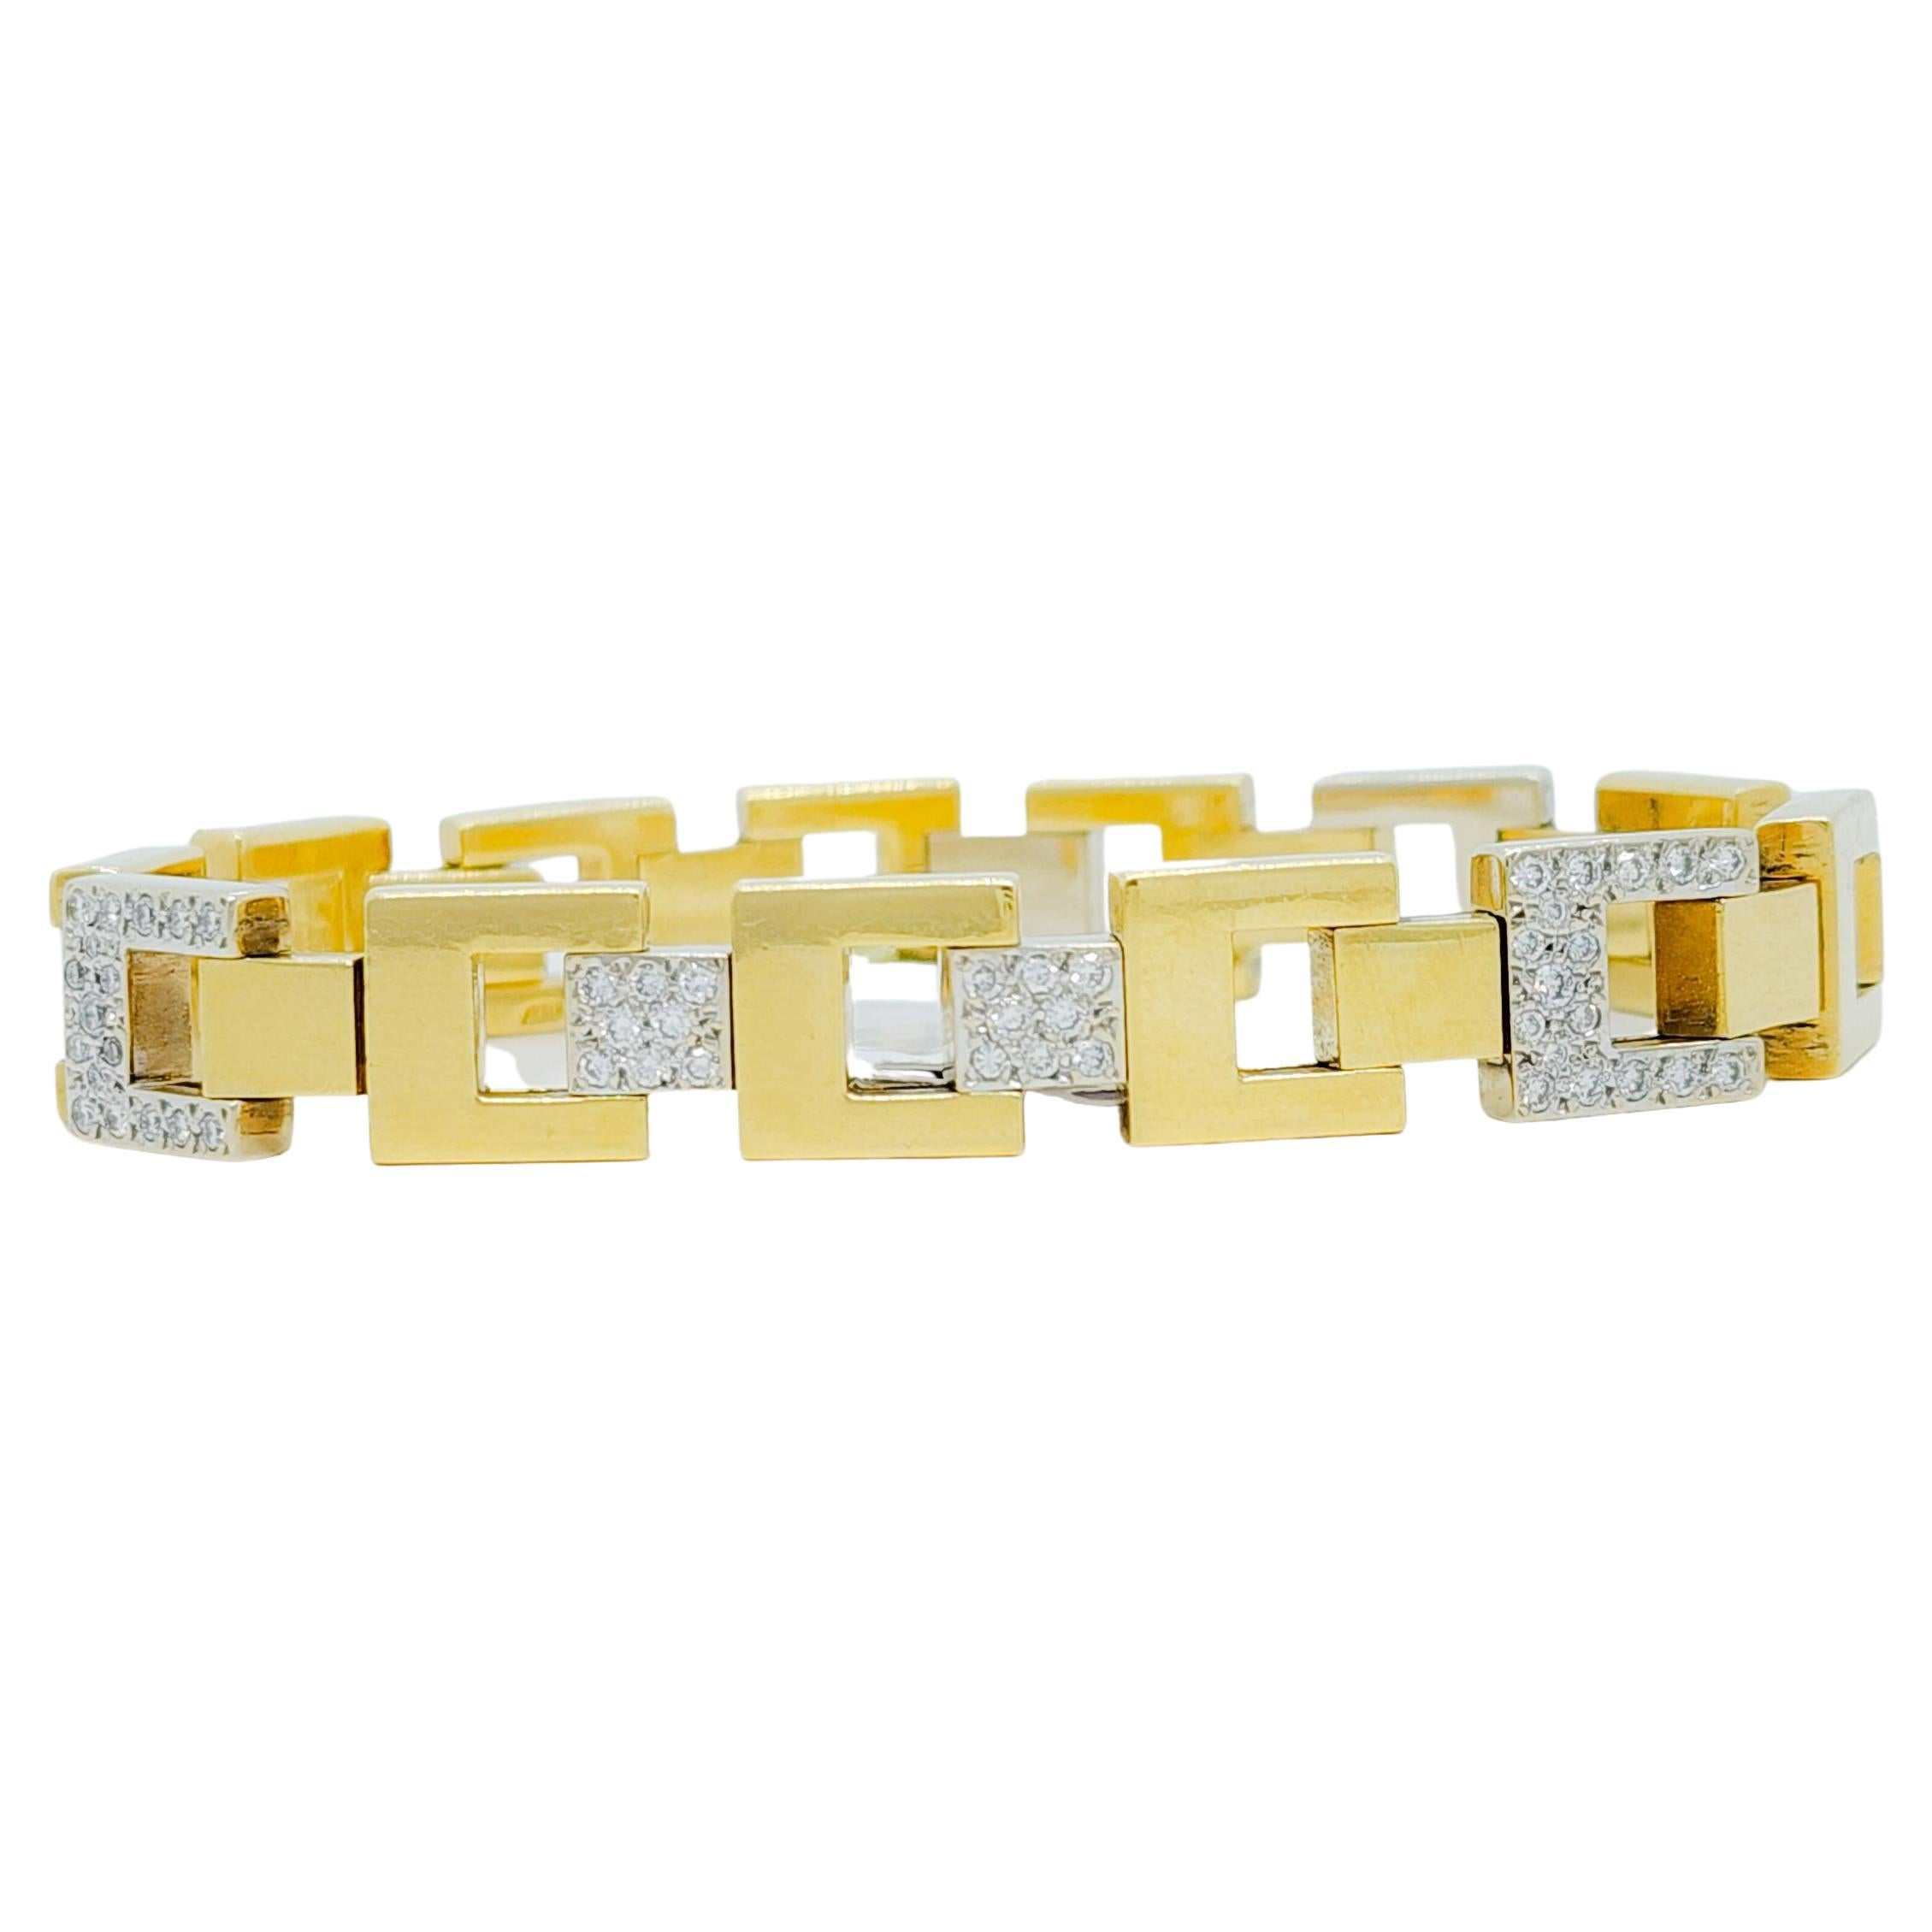 Pomellato White Diamond and 18k Yellow Gold Link Bracelet